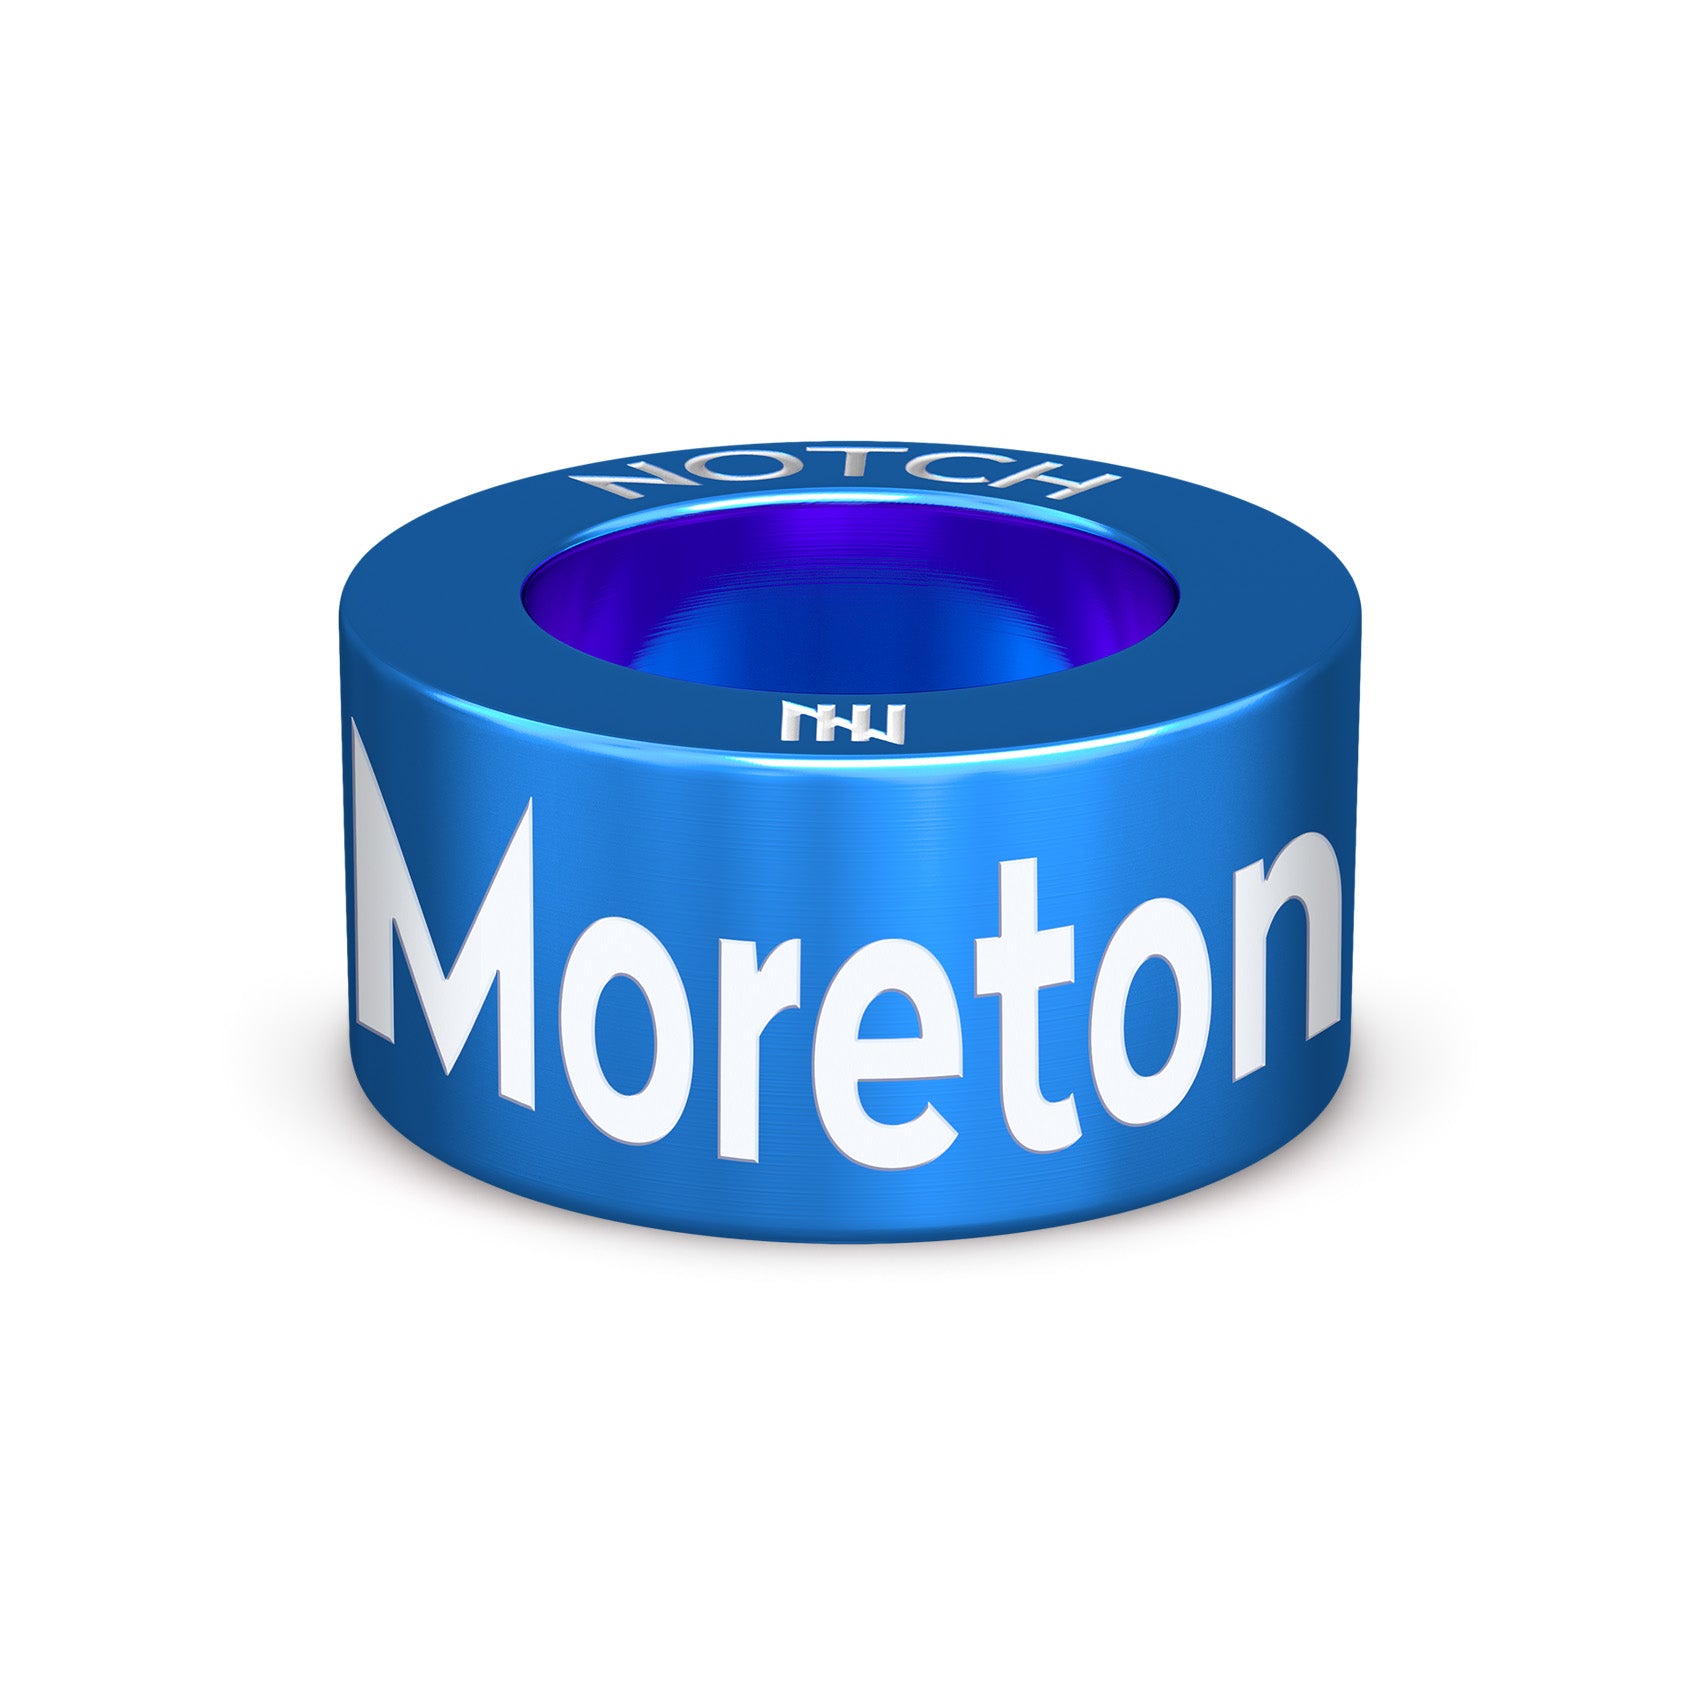 Moreton Marathon NOTCH Charm